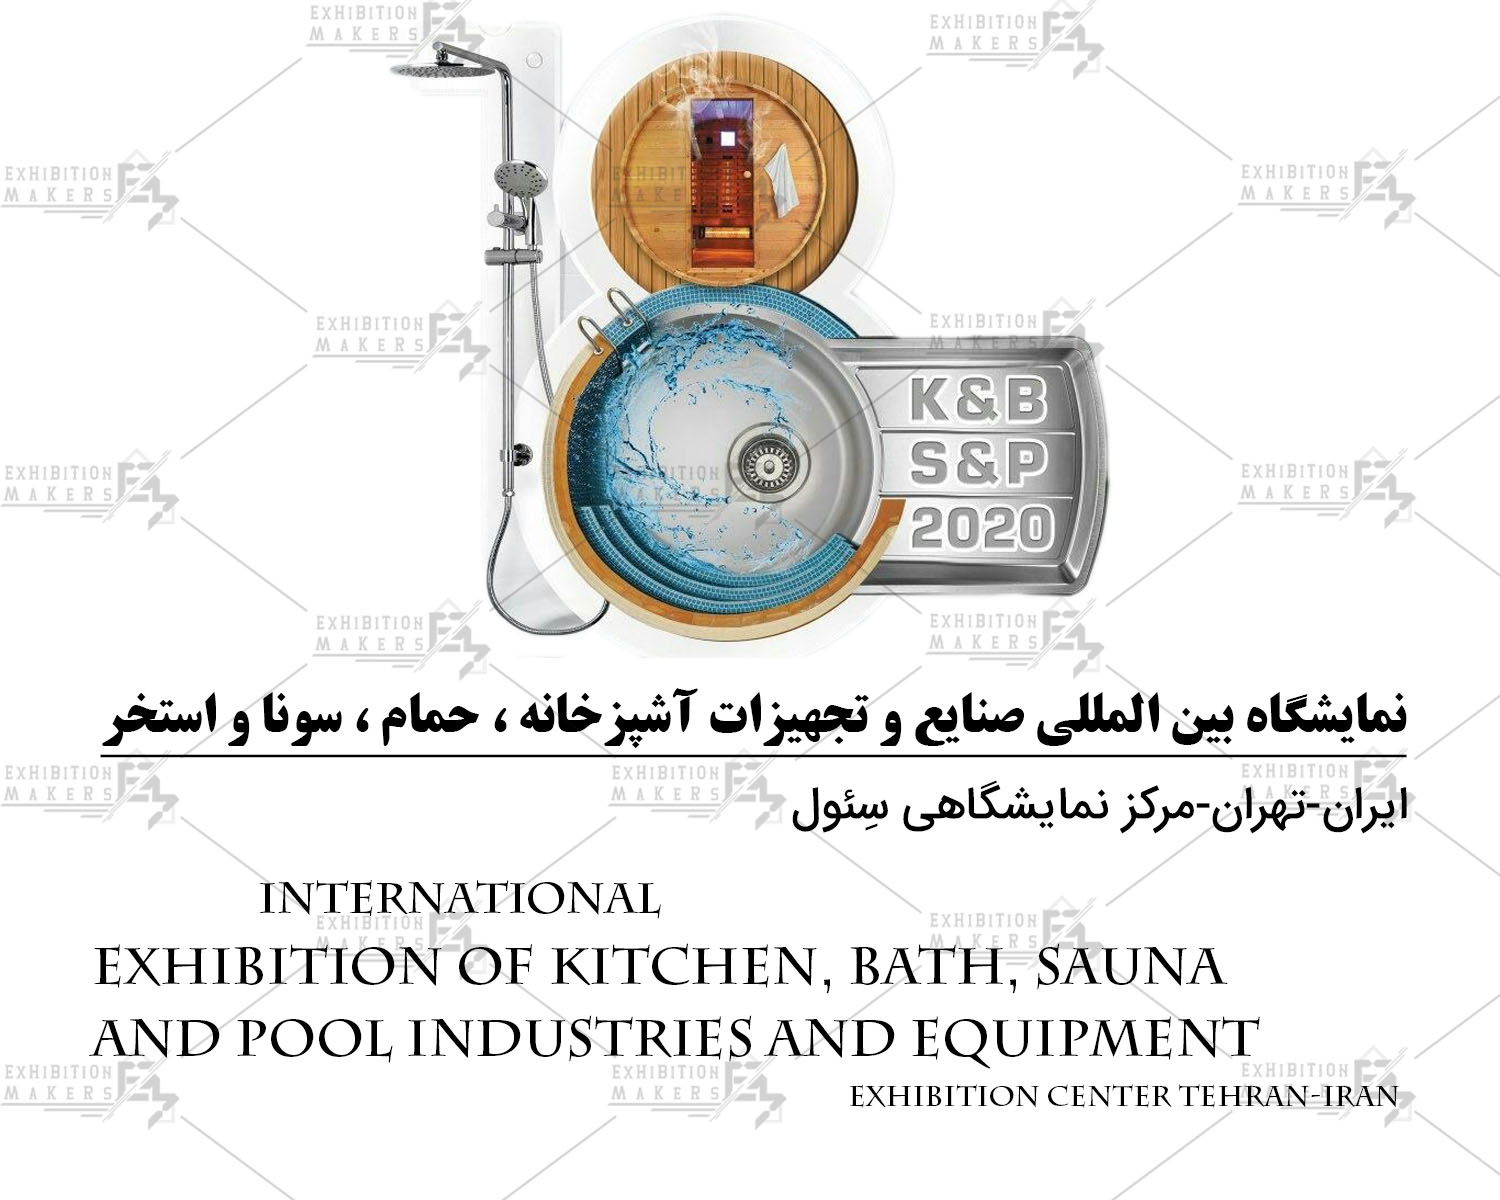 Tehran International Exhibition of Kitchen, Bath, Sauna and Pool Industries and Equipment